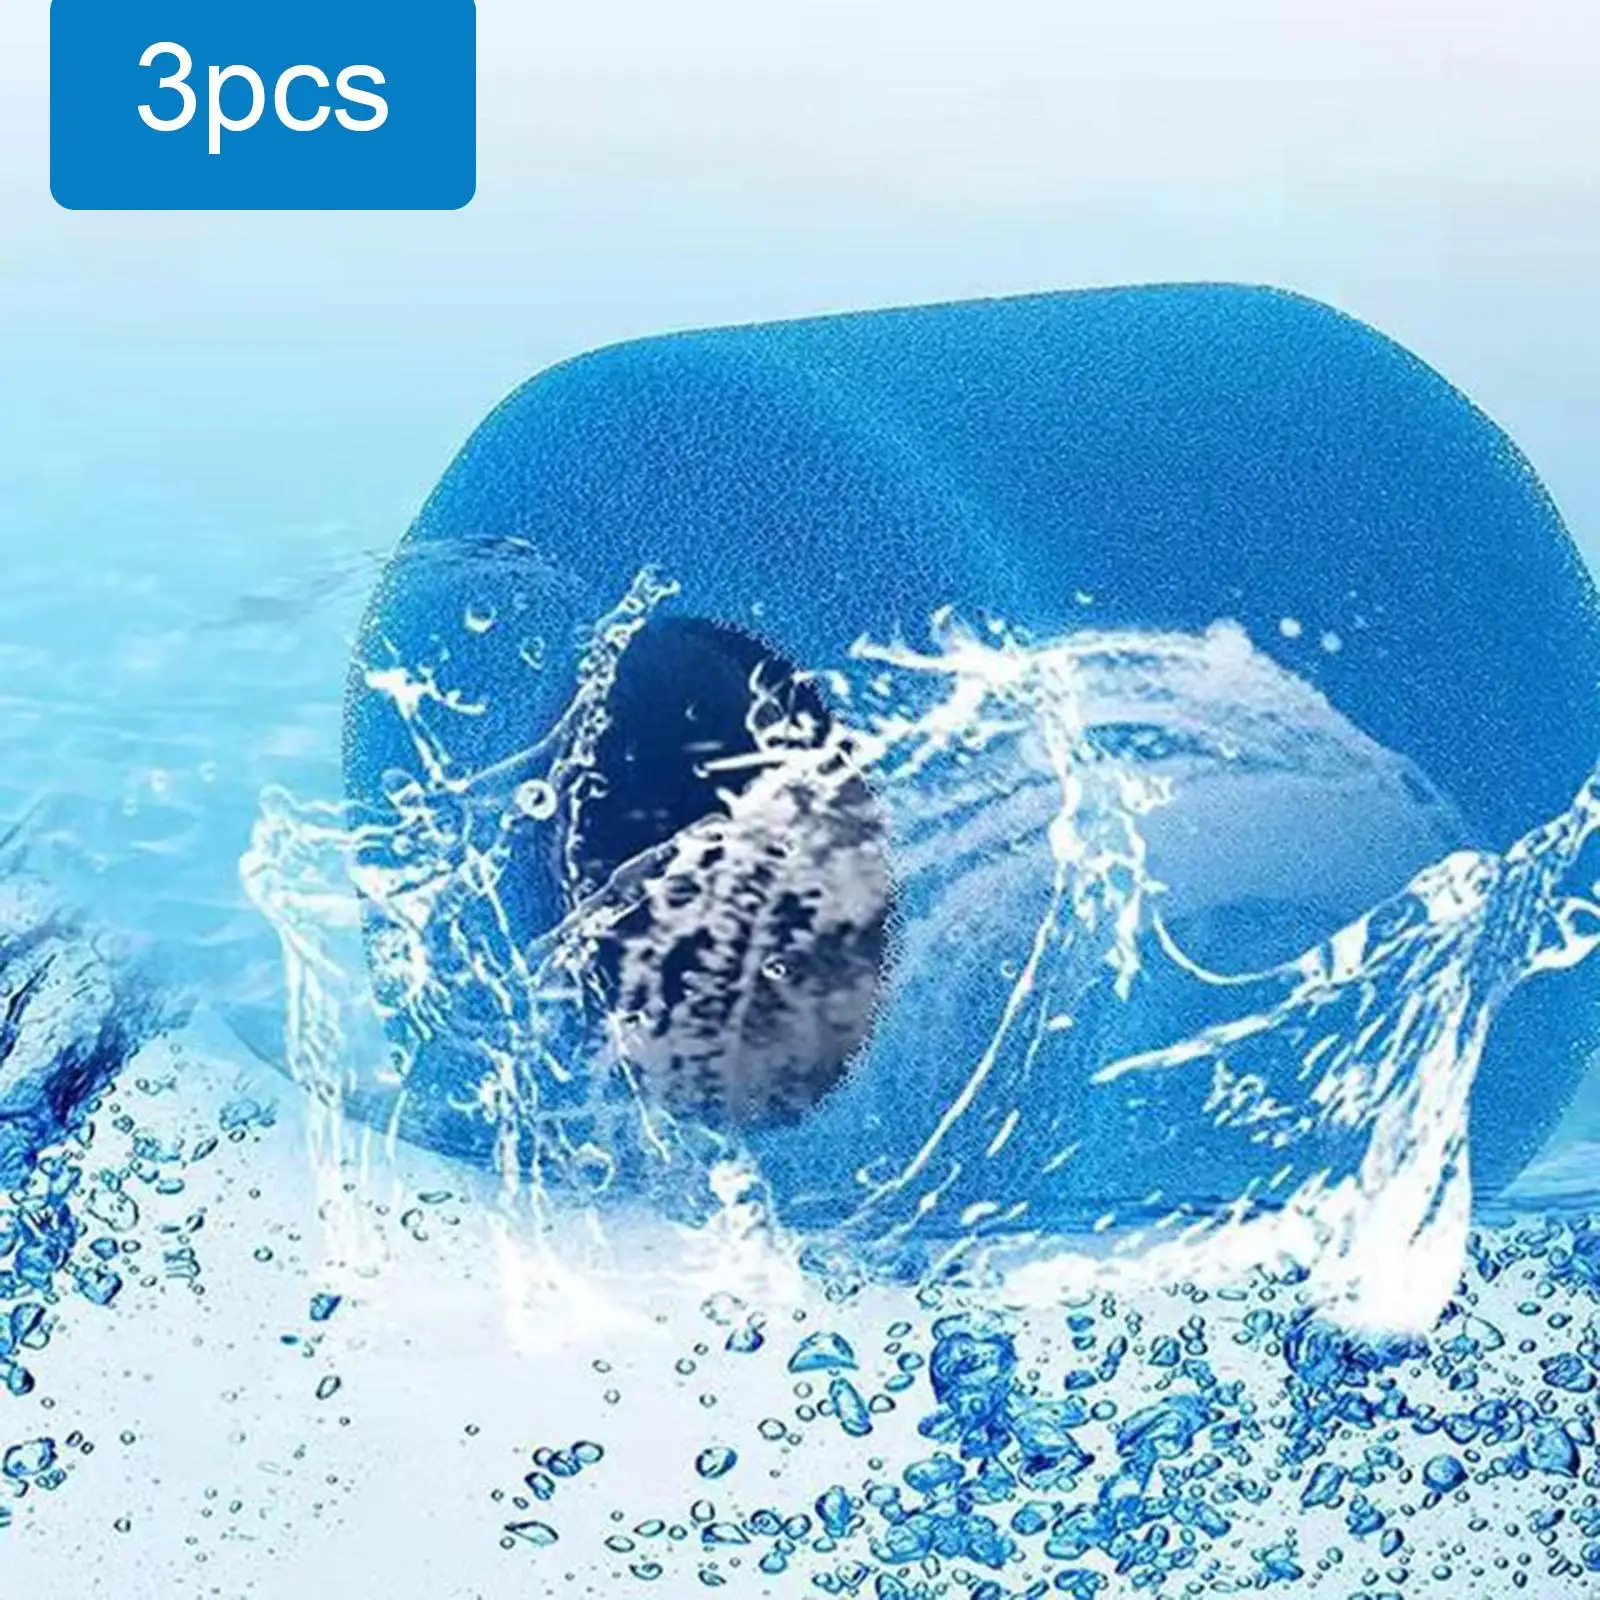 3x Swimming Poo Filter Cartridge  Pool Cleaner Foam for Type V1